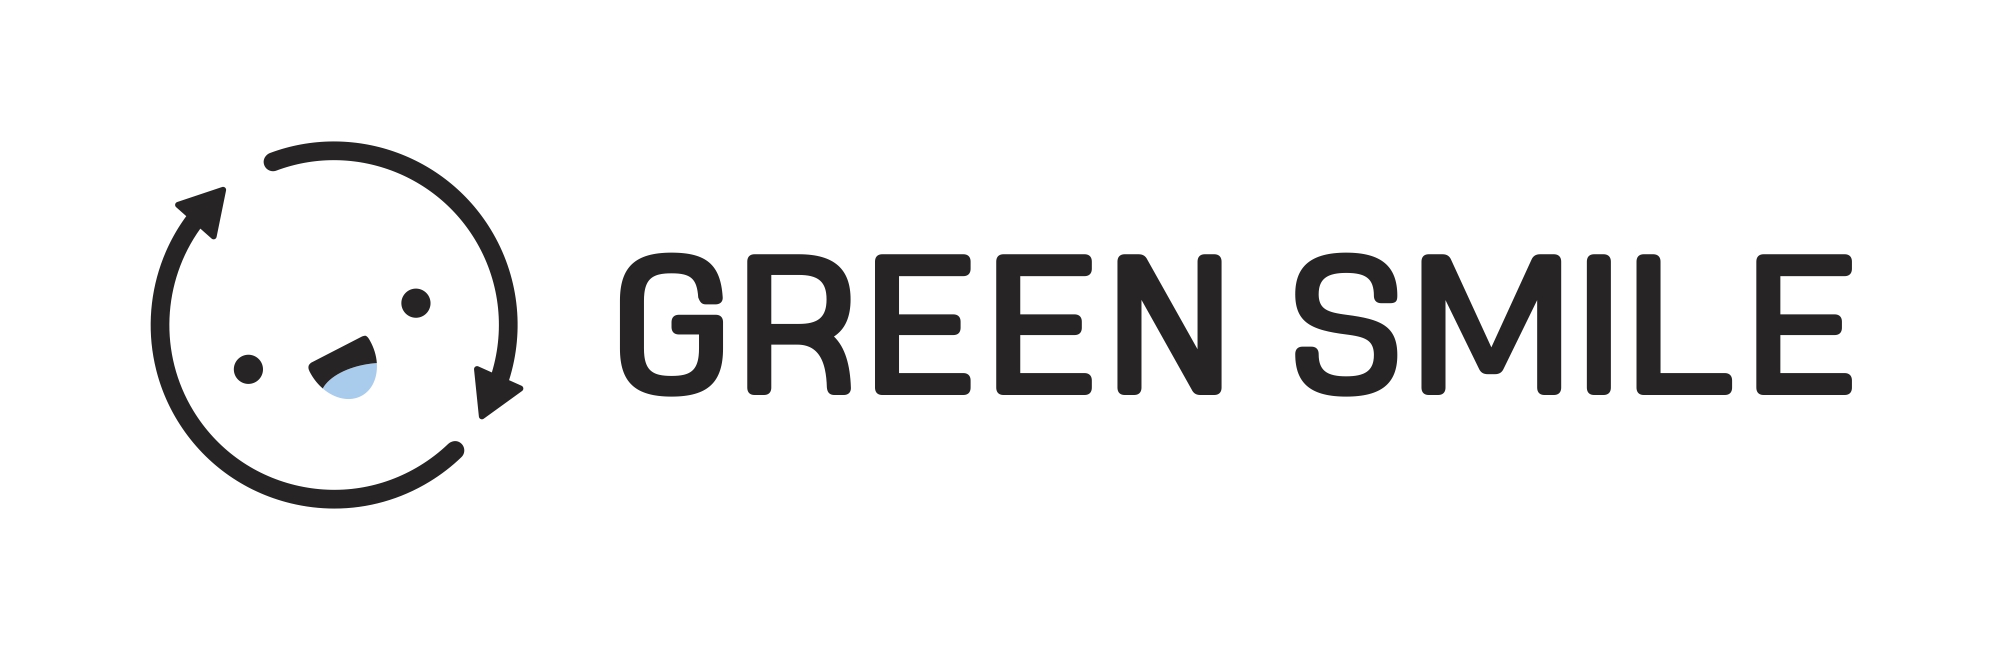 green_smile_logo